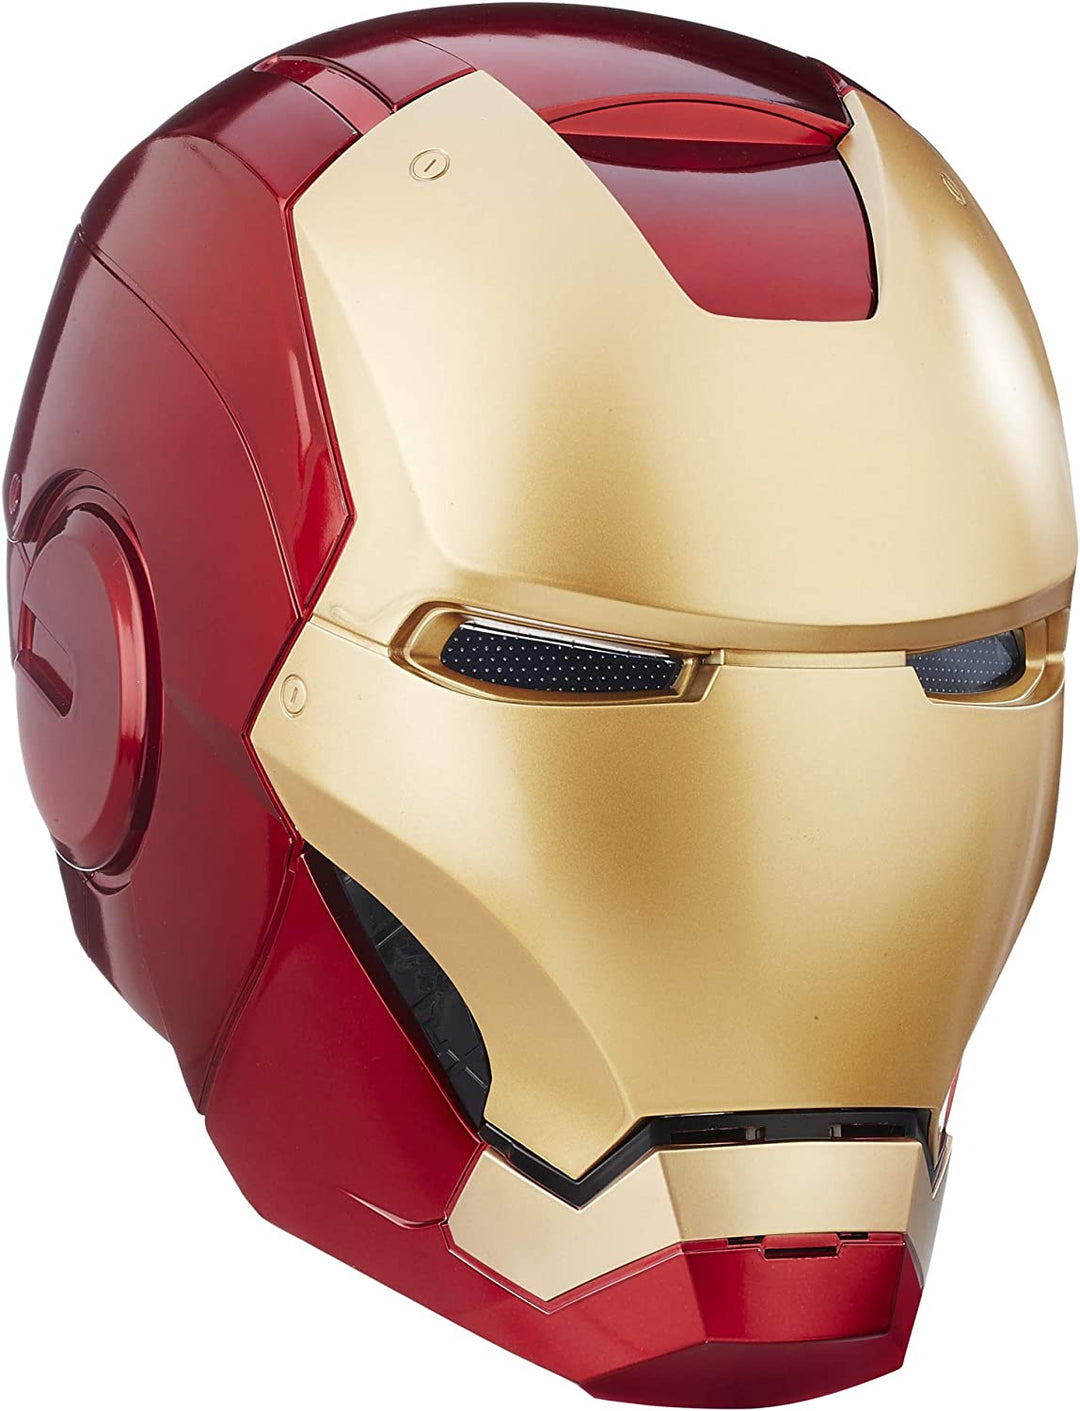 Hasbro Marvel Legends Avengers Iron Man Electronic Helmet (1:1 Replica)